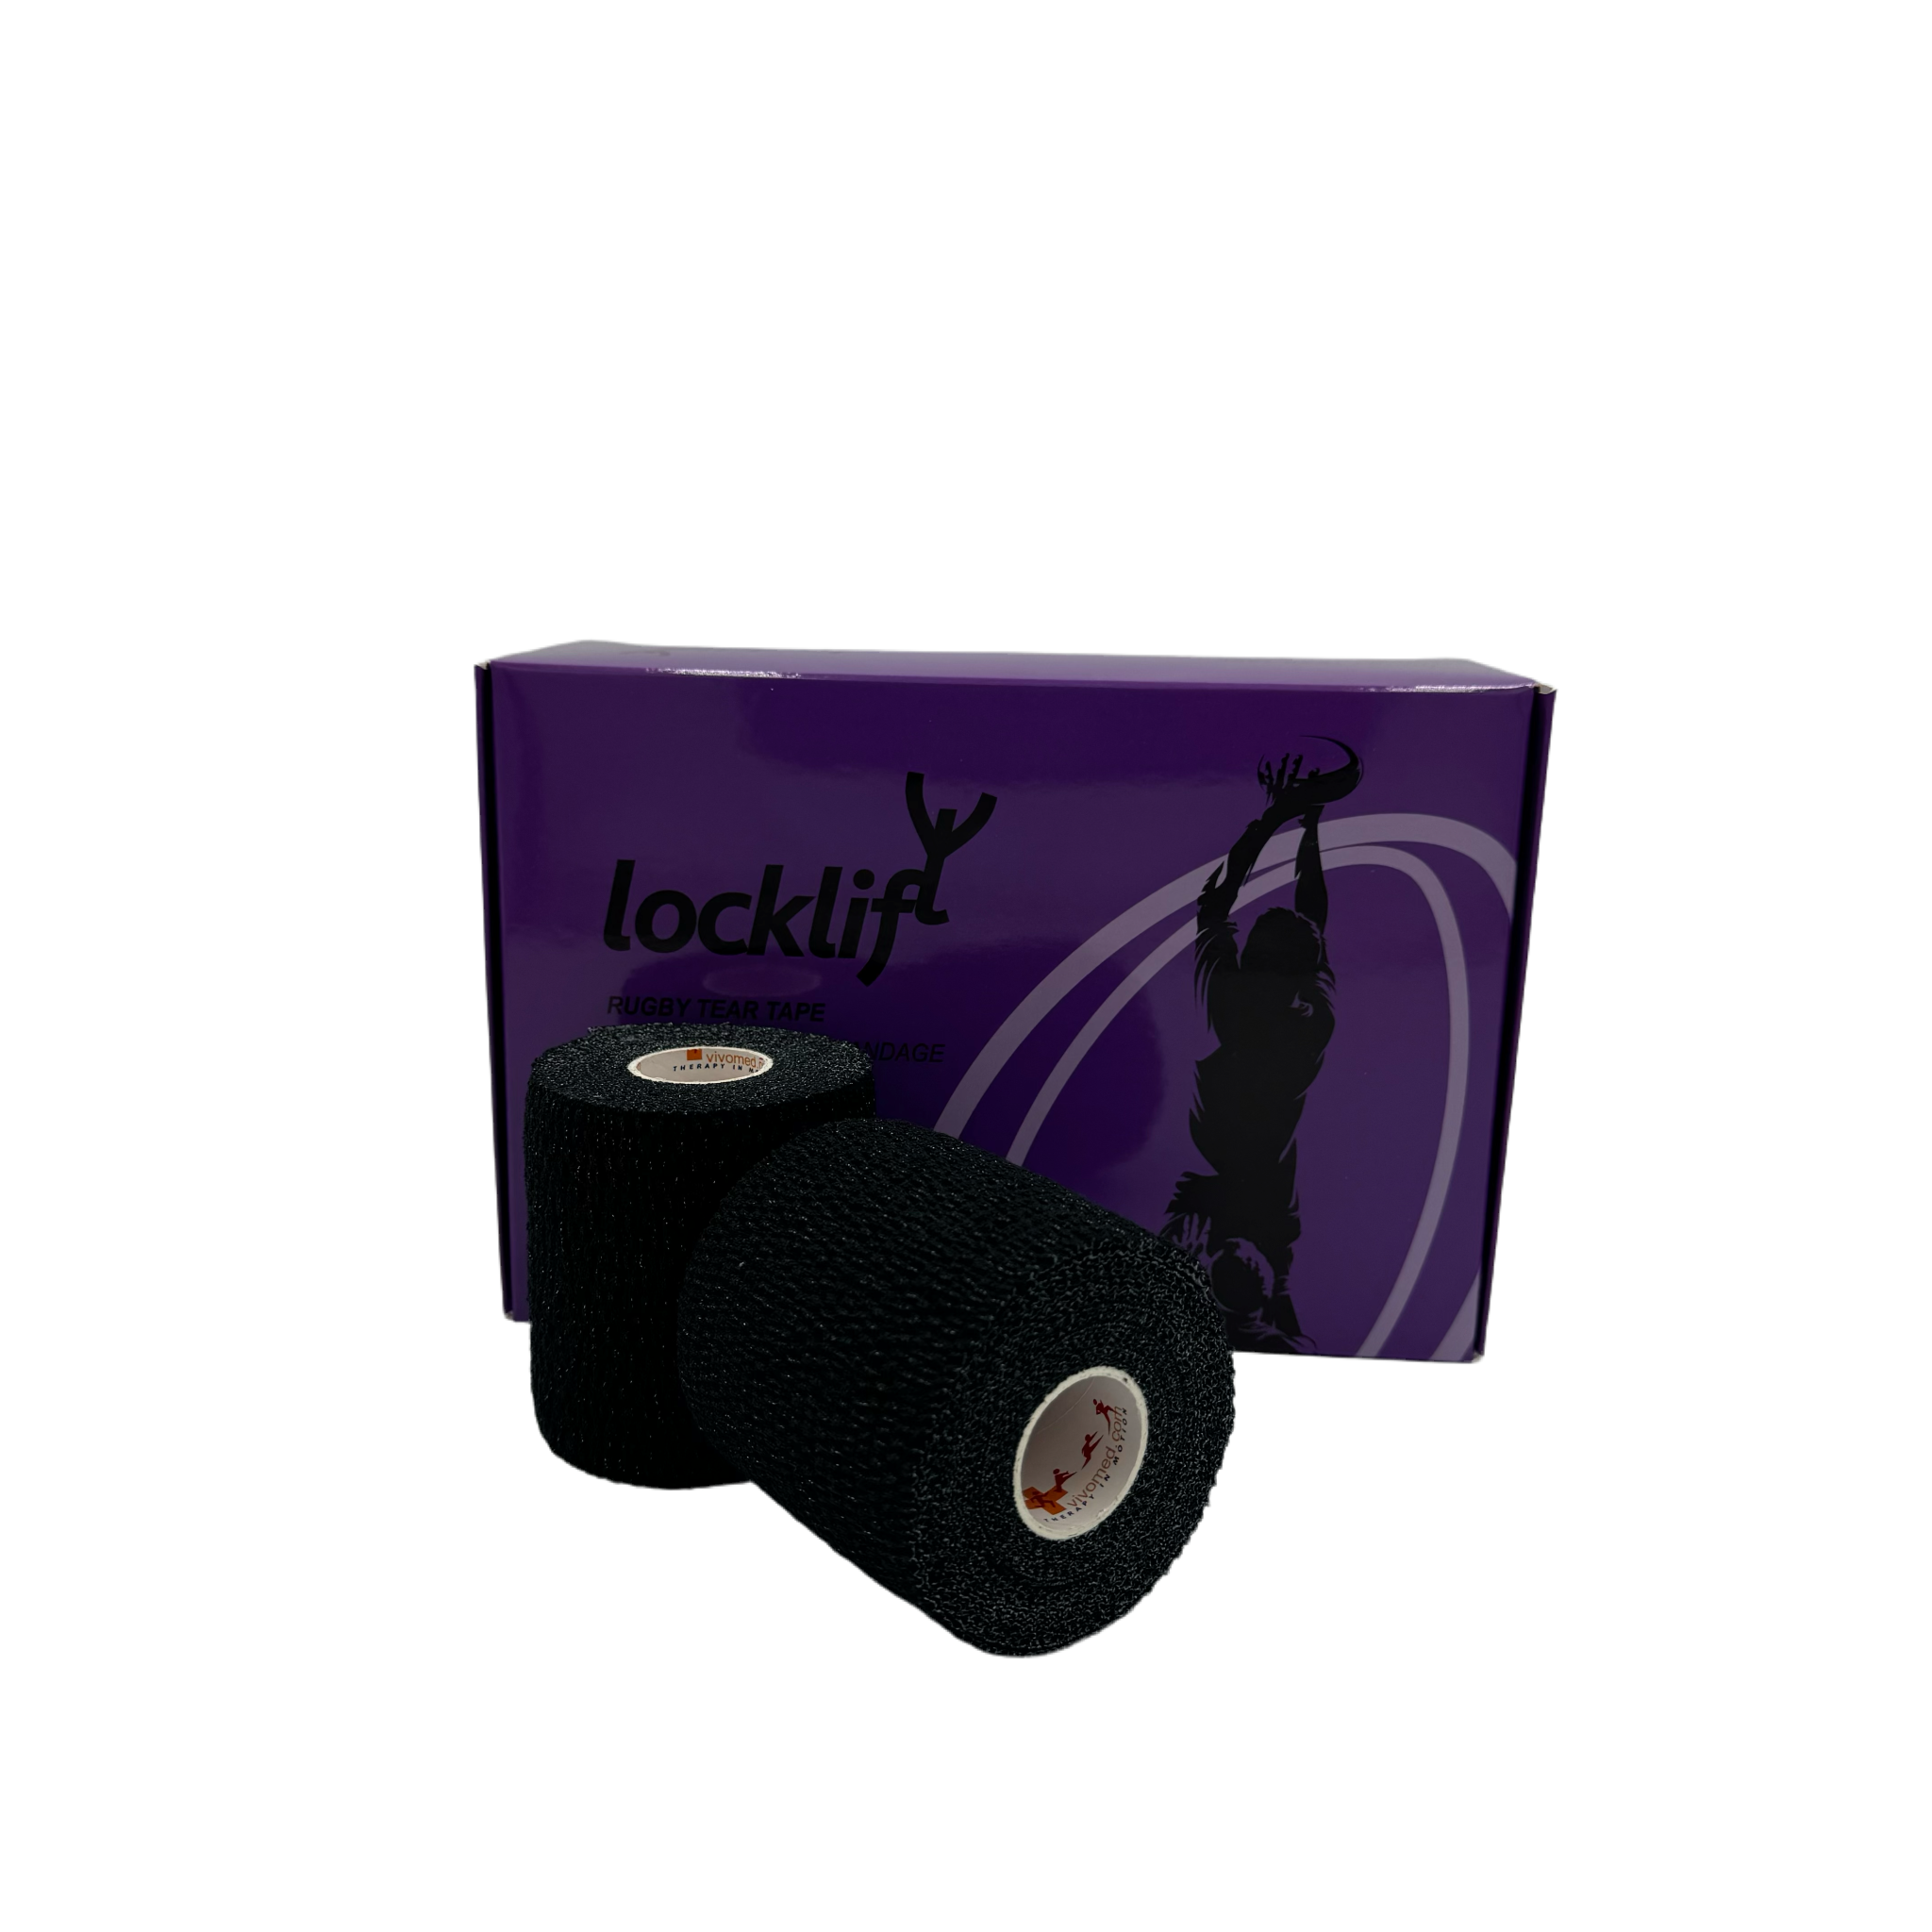 locklift tear tape - rugby thigh sport tape 7.5cms x 6.9m